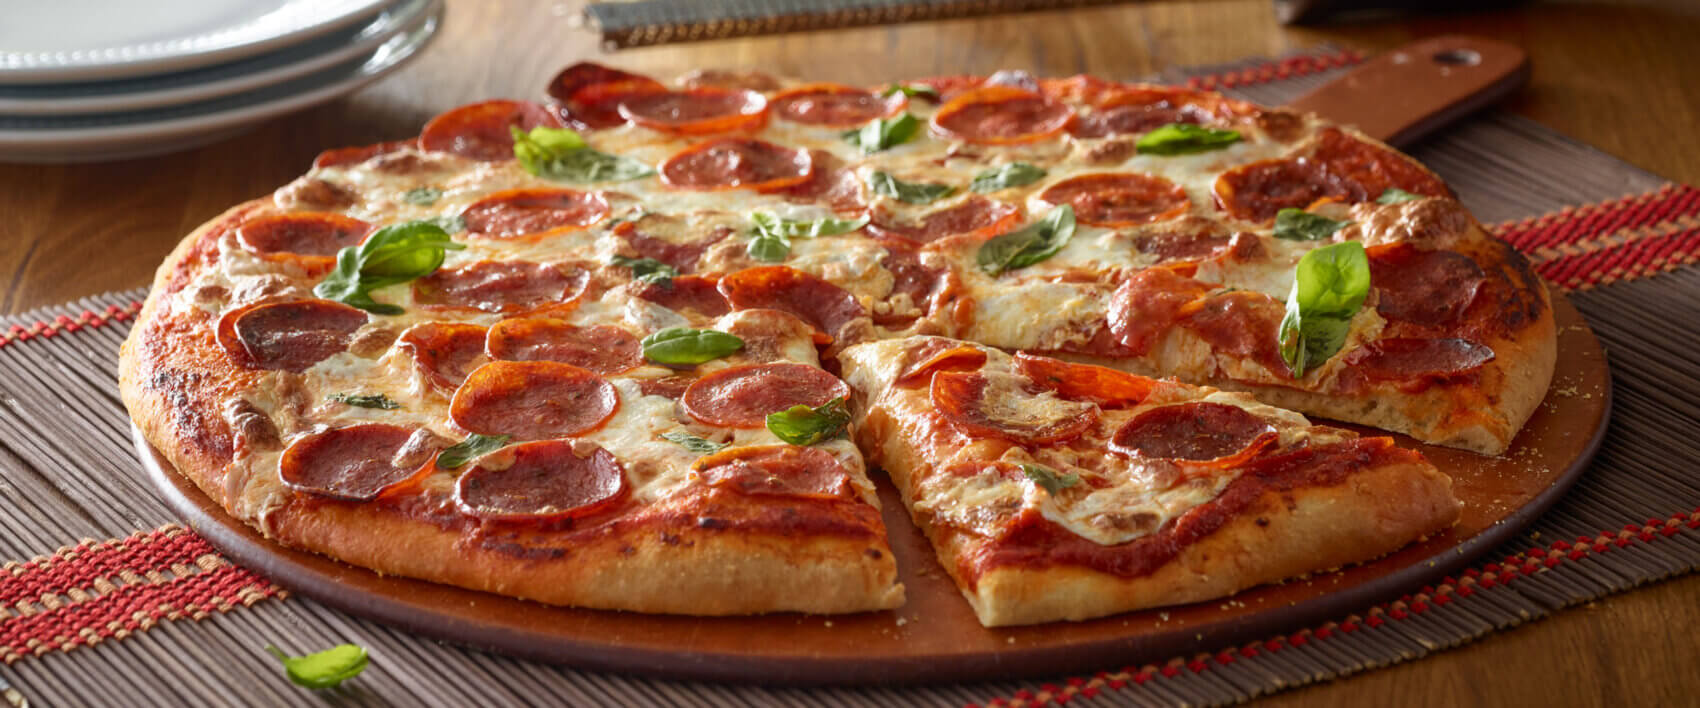 https://www.hormel.com/brands/hormel-pepperoni/wp-content/uploads/sites/3/Recipes_2400_Spicy-Pepperoni-Pizza-1700x708.jpg